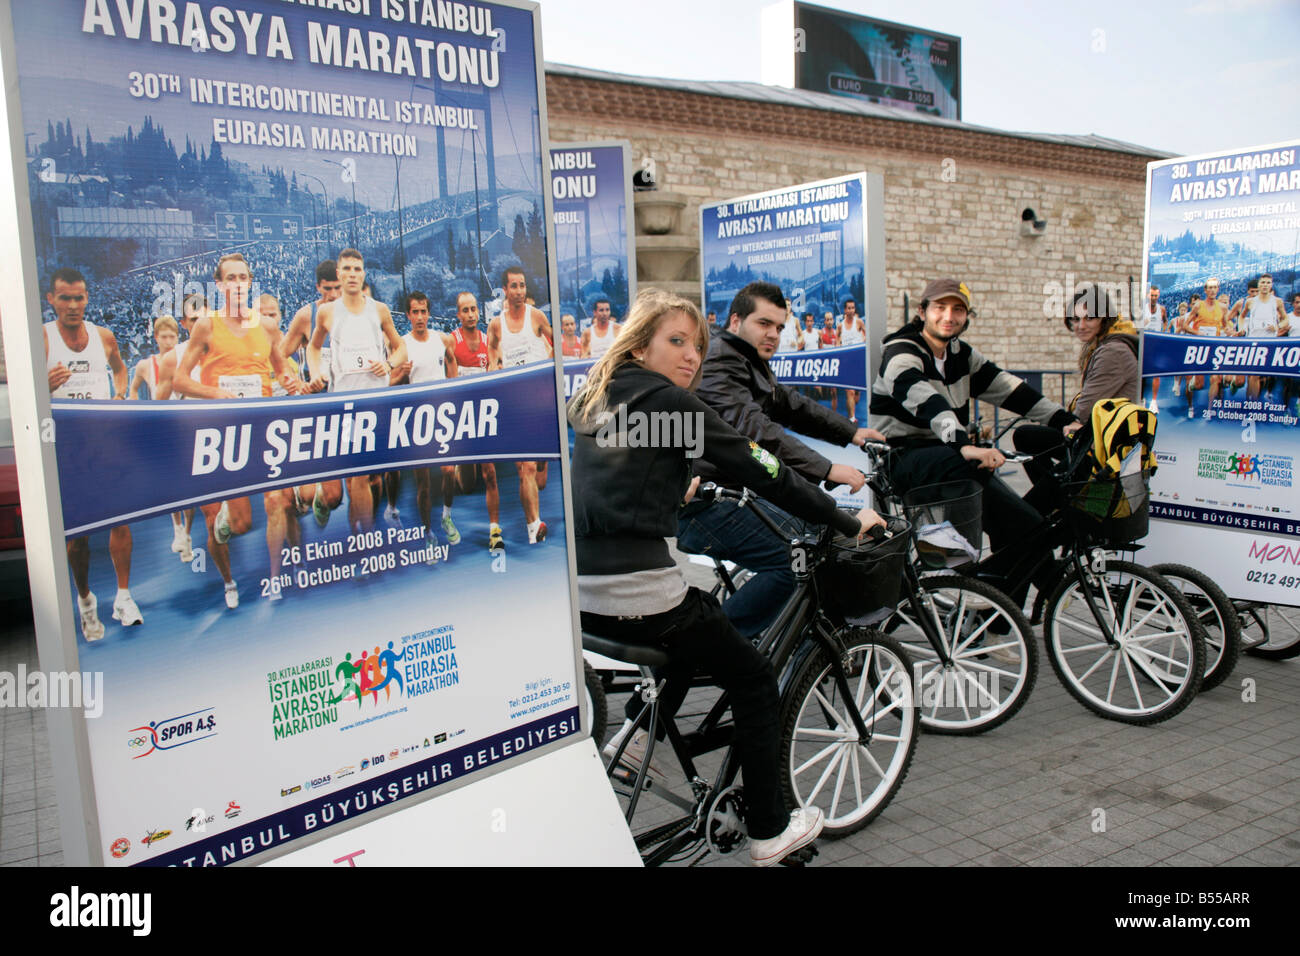 Werbung des 30. Intercontinental Istanbul Eurasia Marathons in Taksim, Istanbul, Türkei, 2008 Stockfoto